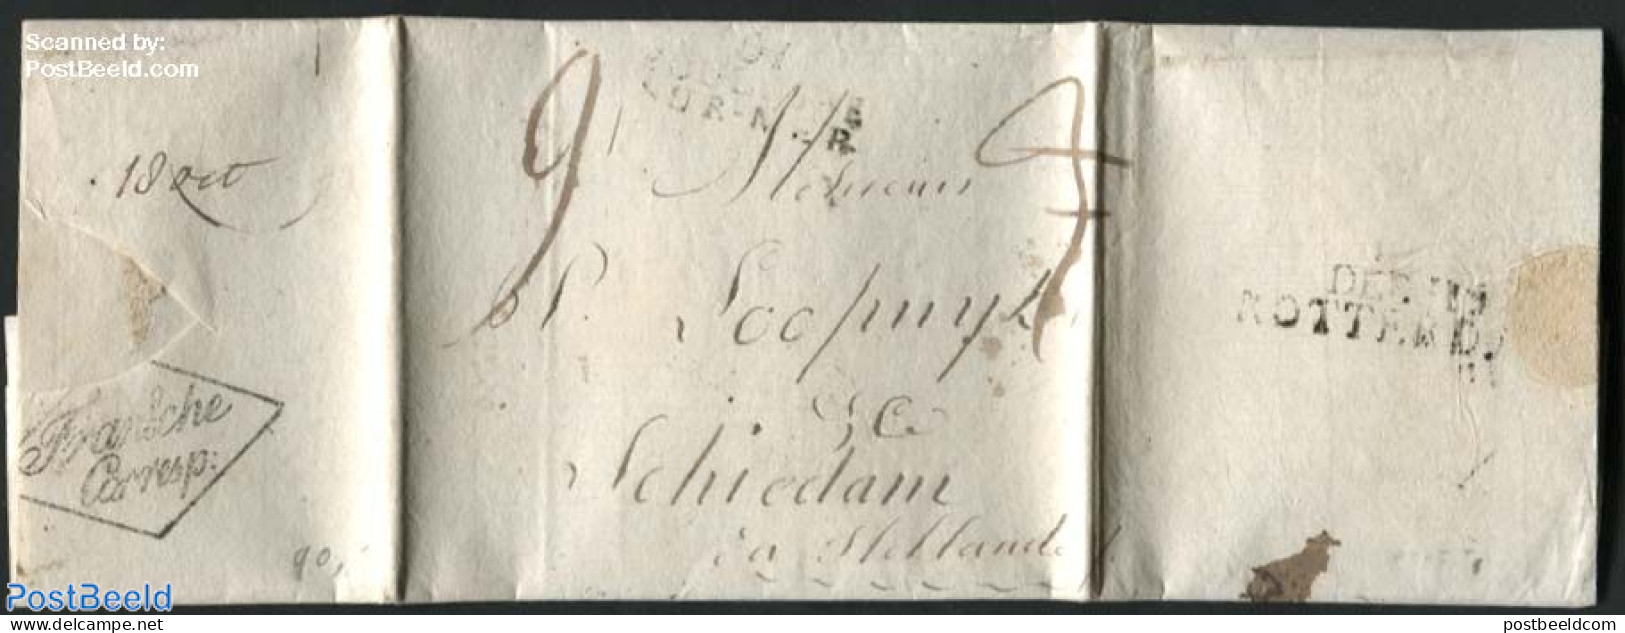 Netherlands 1815 Letter From Rotterdam (Debourse) To Schiedam, Postmark: Fransche Corresp., Postal History - ...-1852 Préphilatélie